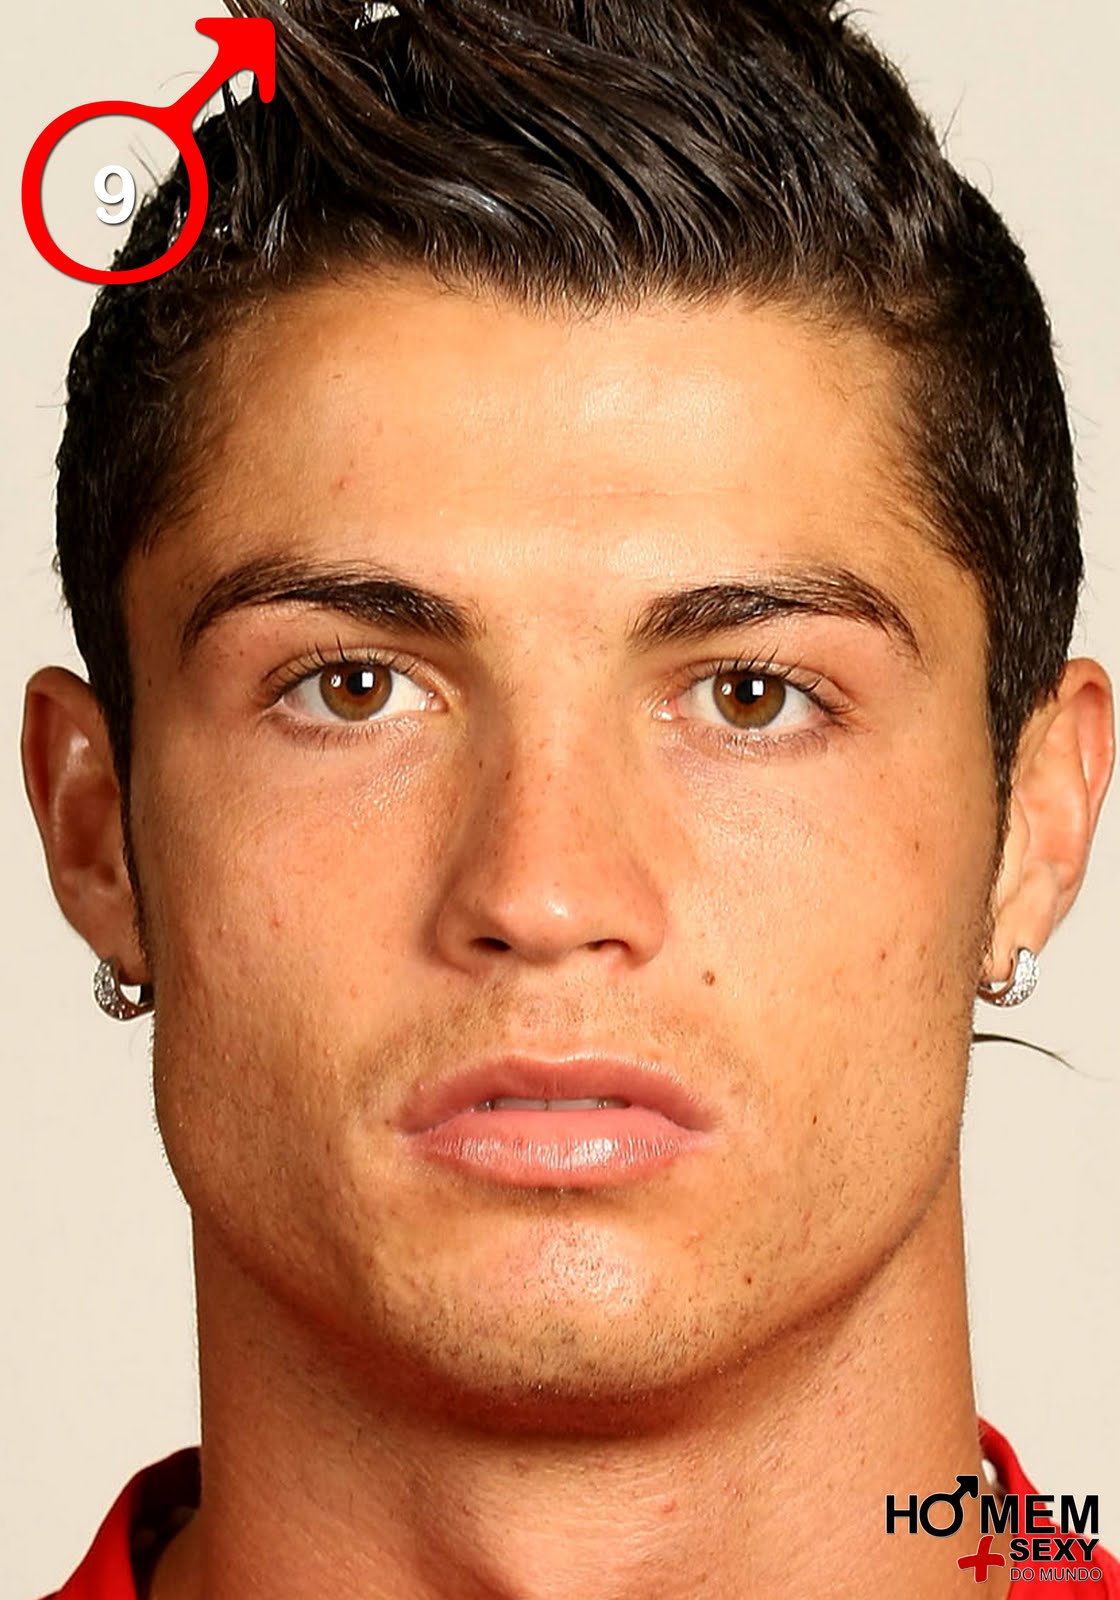 http://3.bp.blogspot.com/-Kl3fEbtvIJU/TmIOSemOmFI/AAAAAAAAUtc/U2oOujCC0wU/s1600/09a+-+Cristiano+Ronaldo.jpg